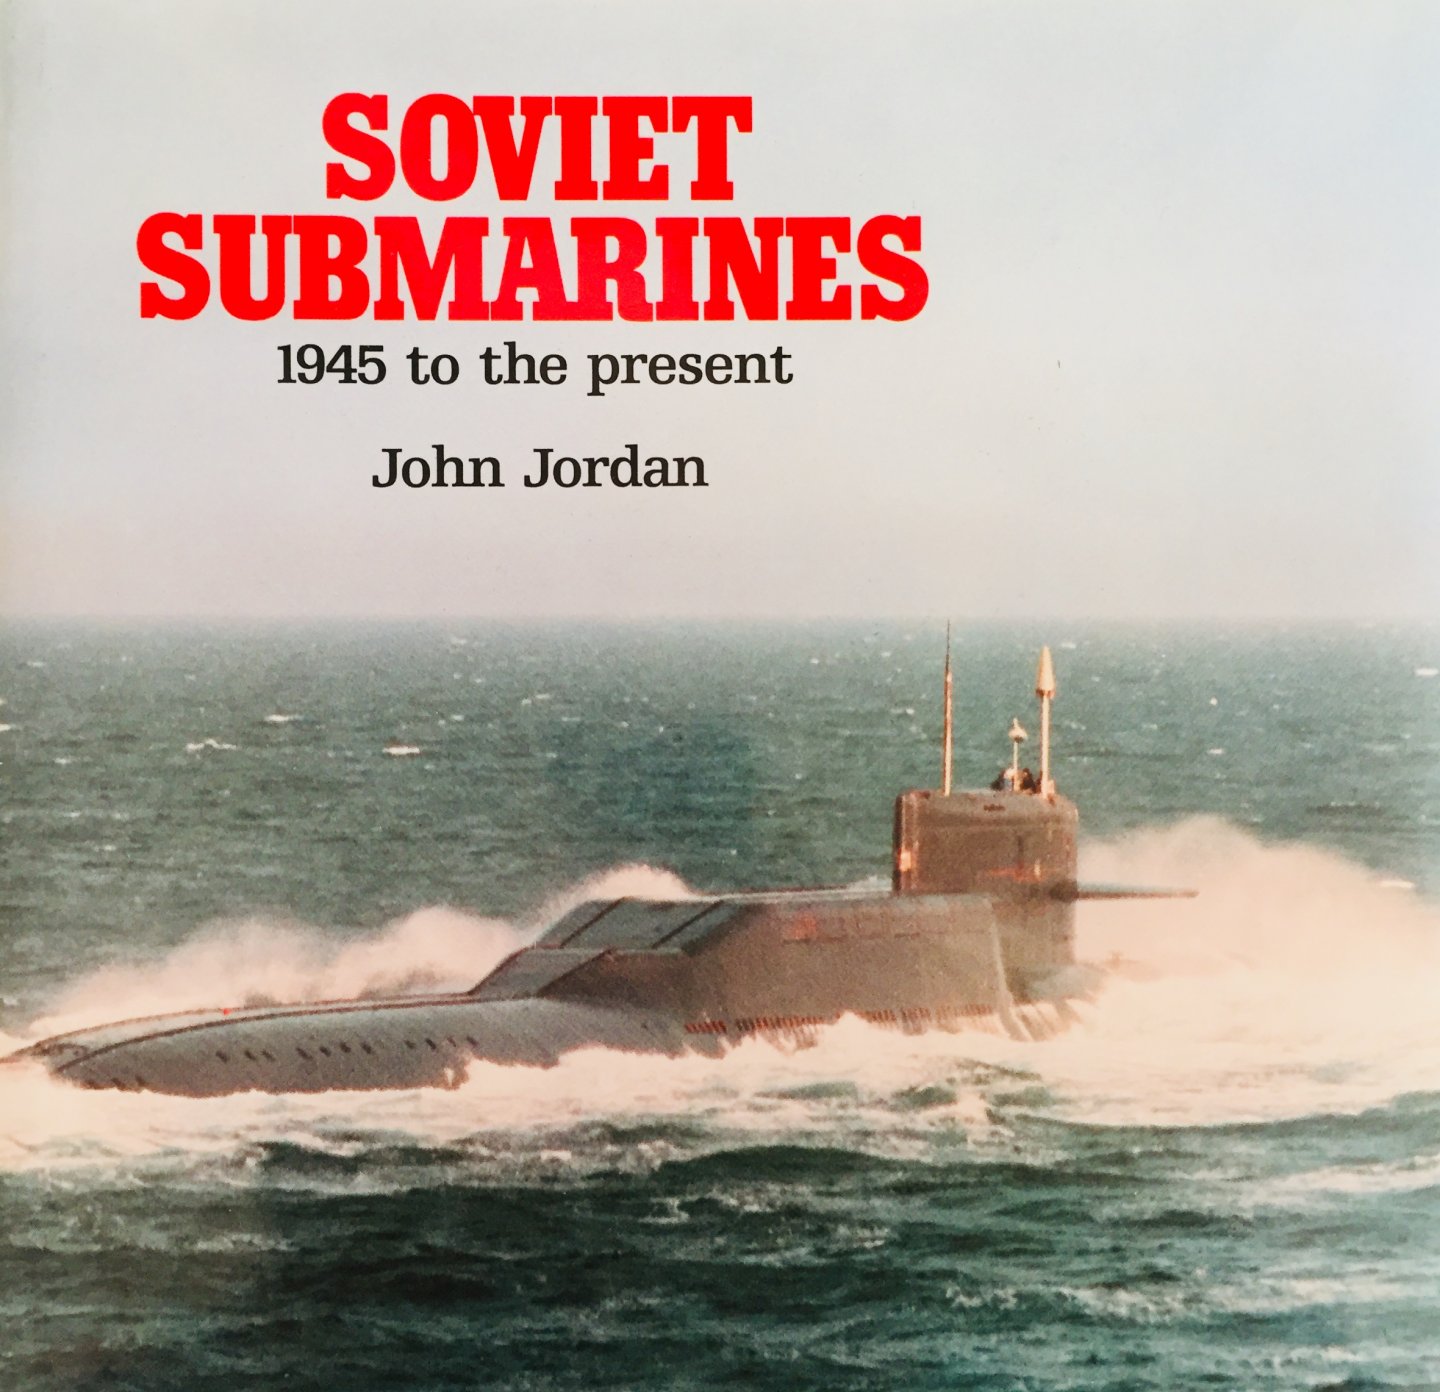 Jordan, John. - Soviet submarines. 1945 to the present.